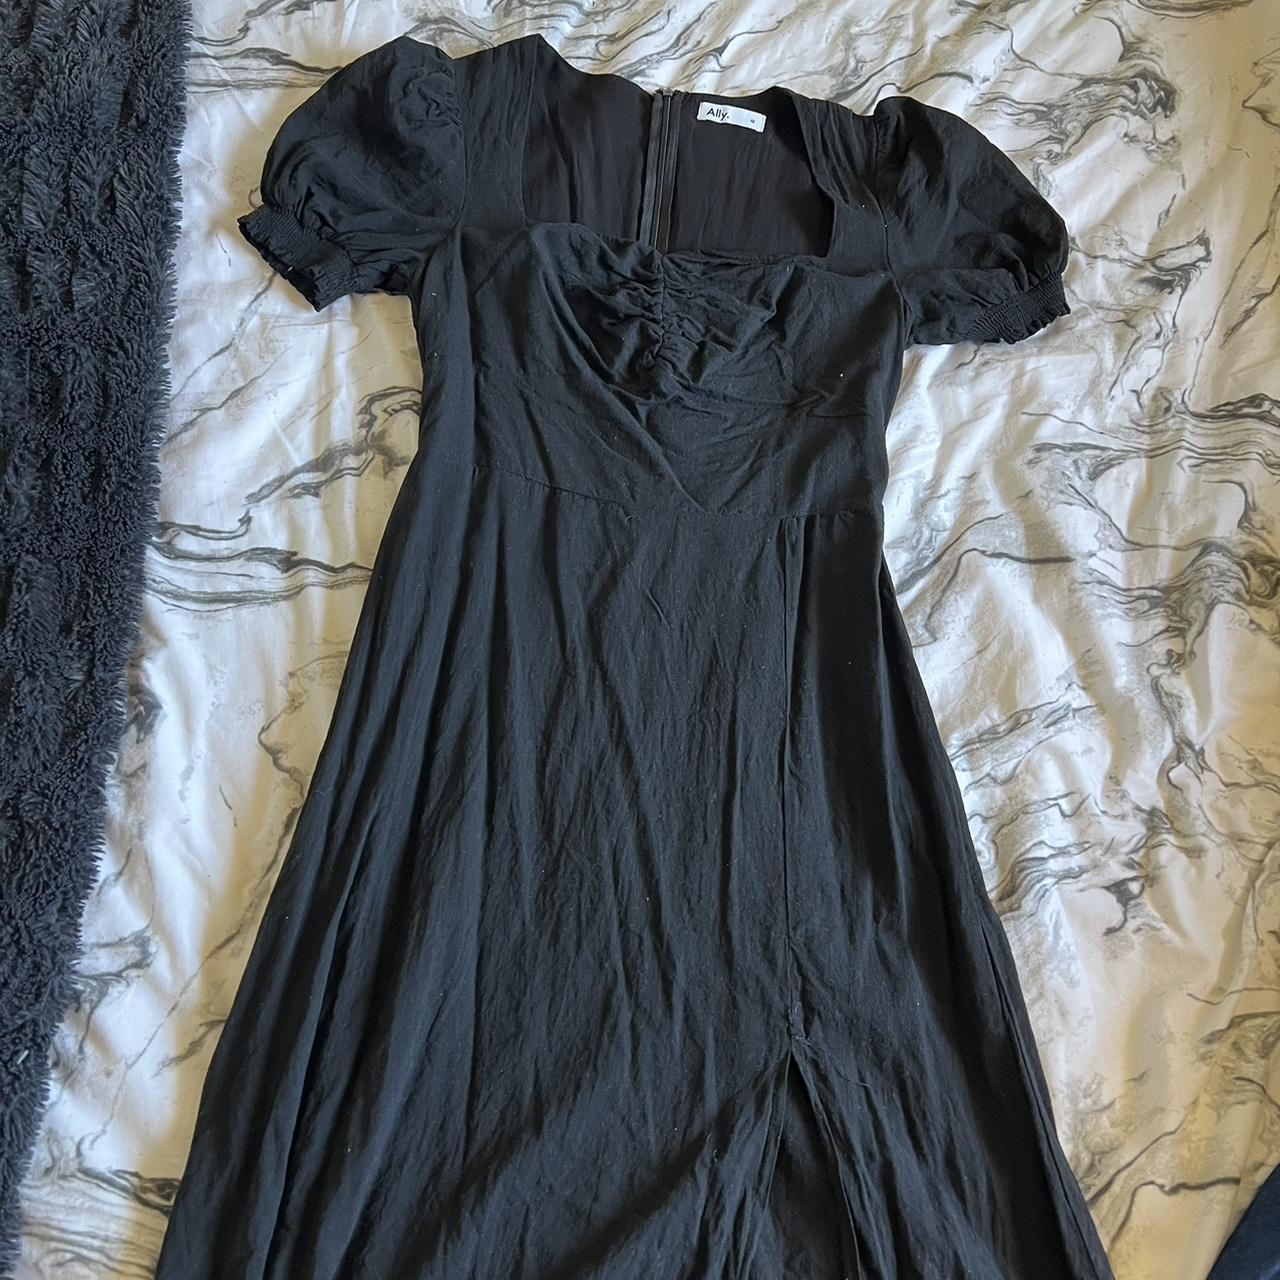 Cute black dress - Depop